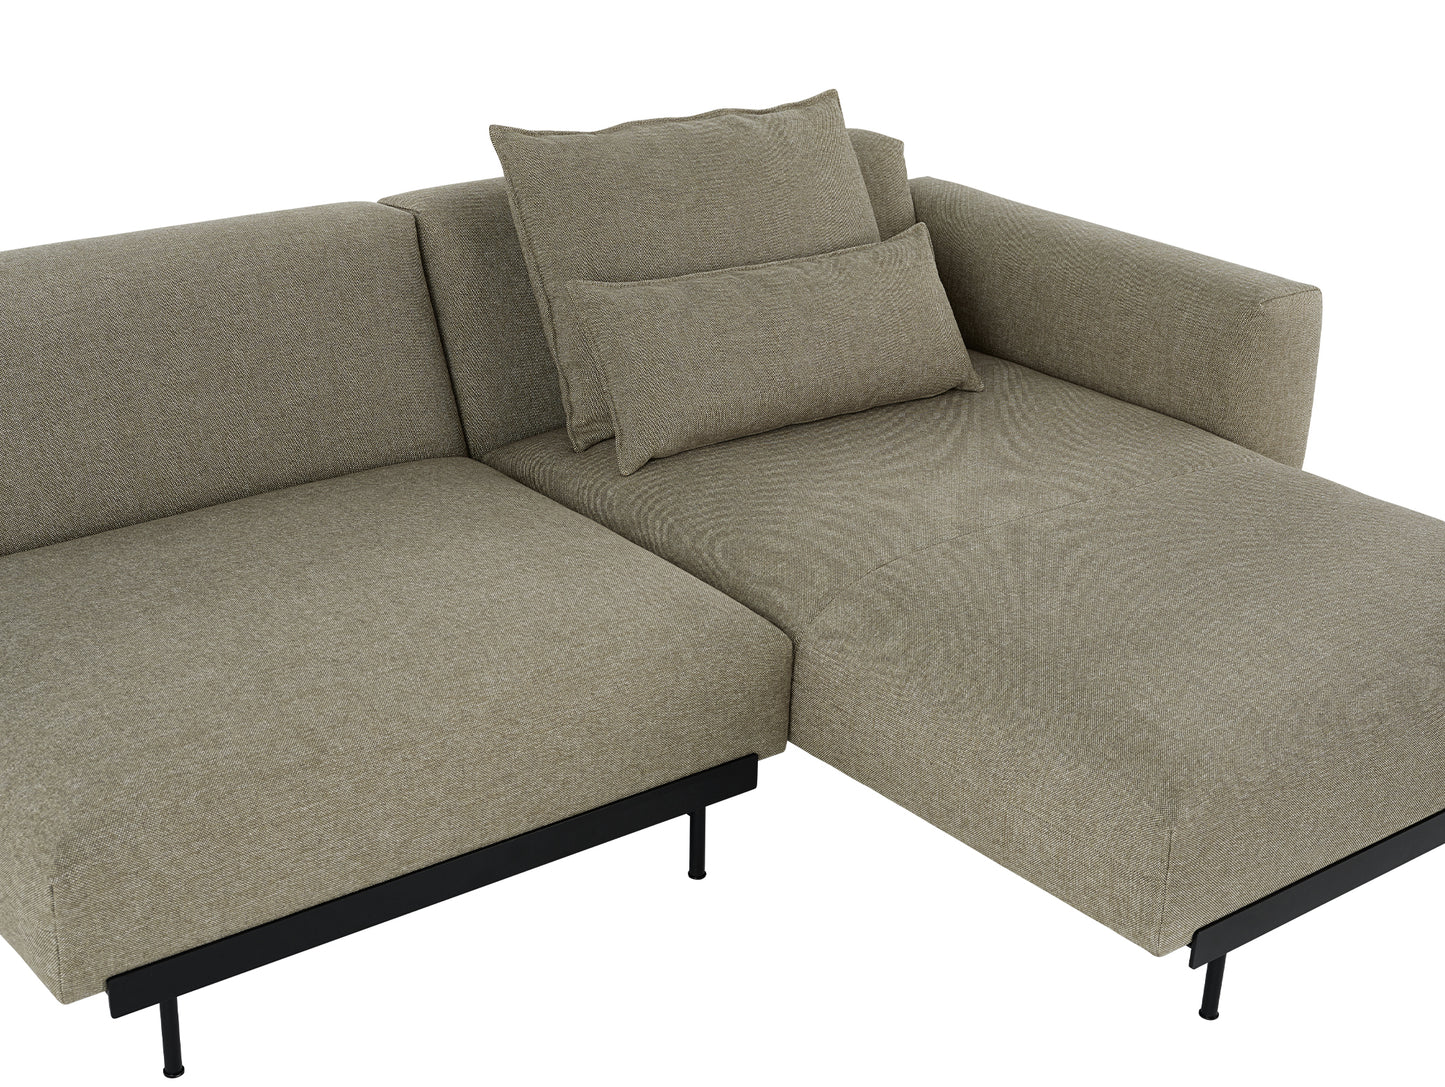    In Situ 2-Seater Modular Sofa by Muuto - Configuration 7 / clay 15